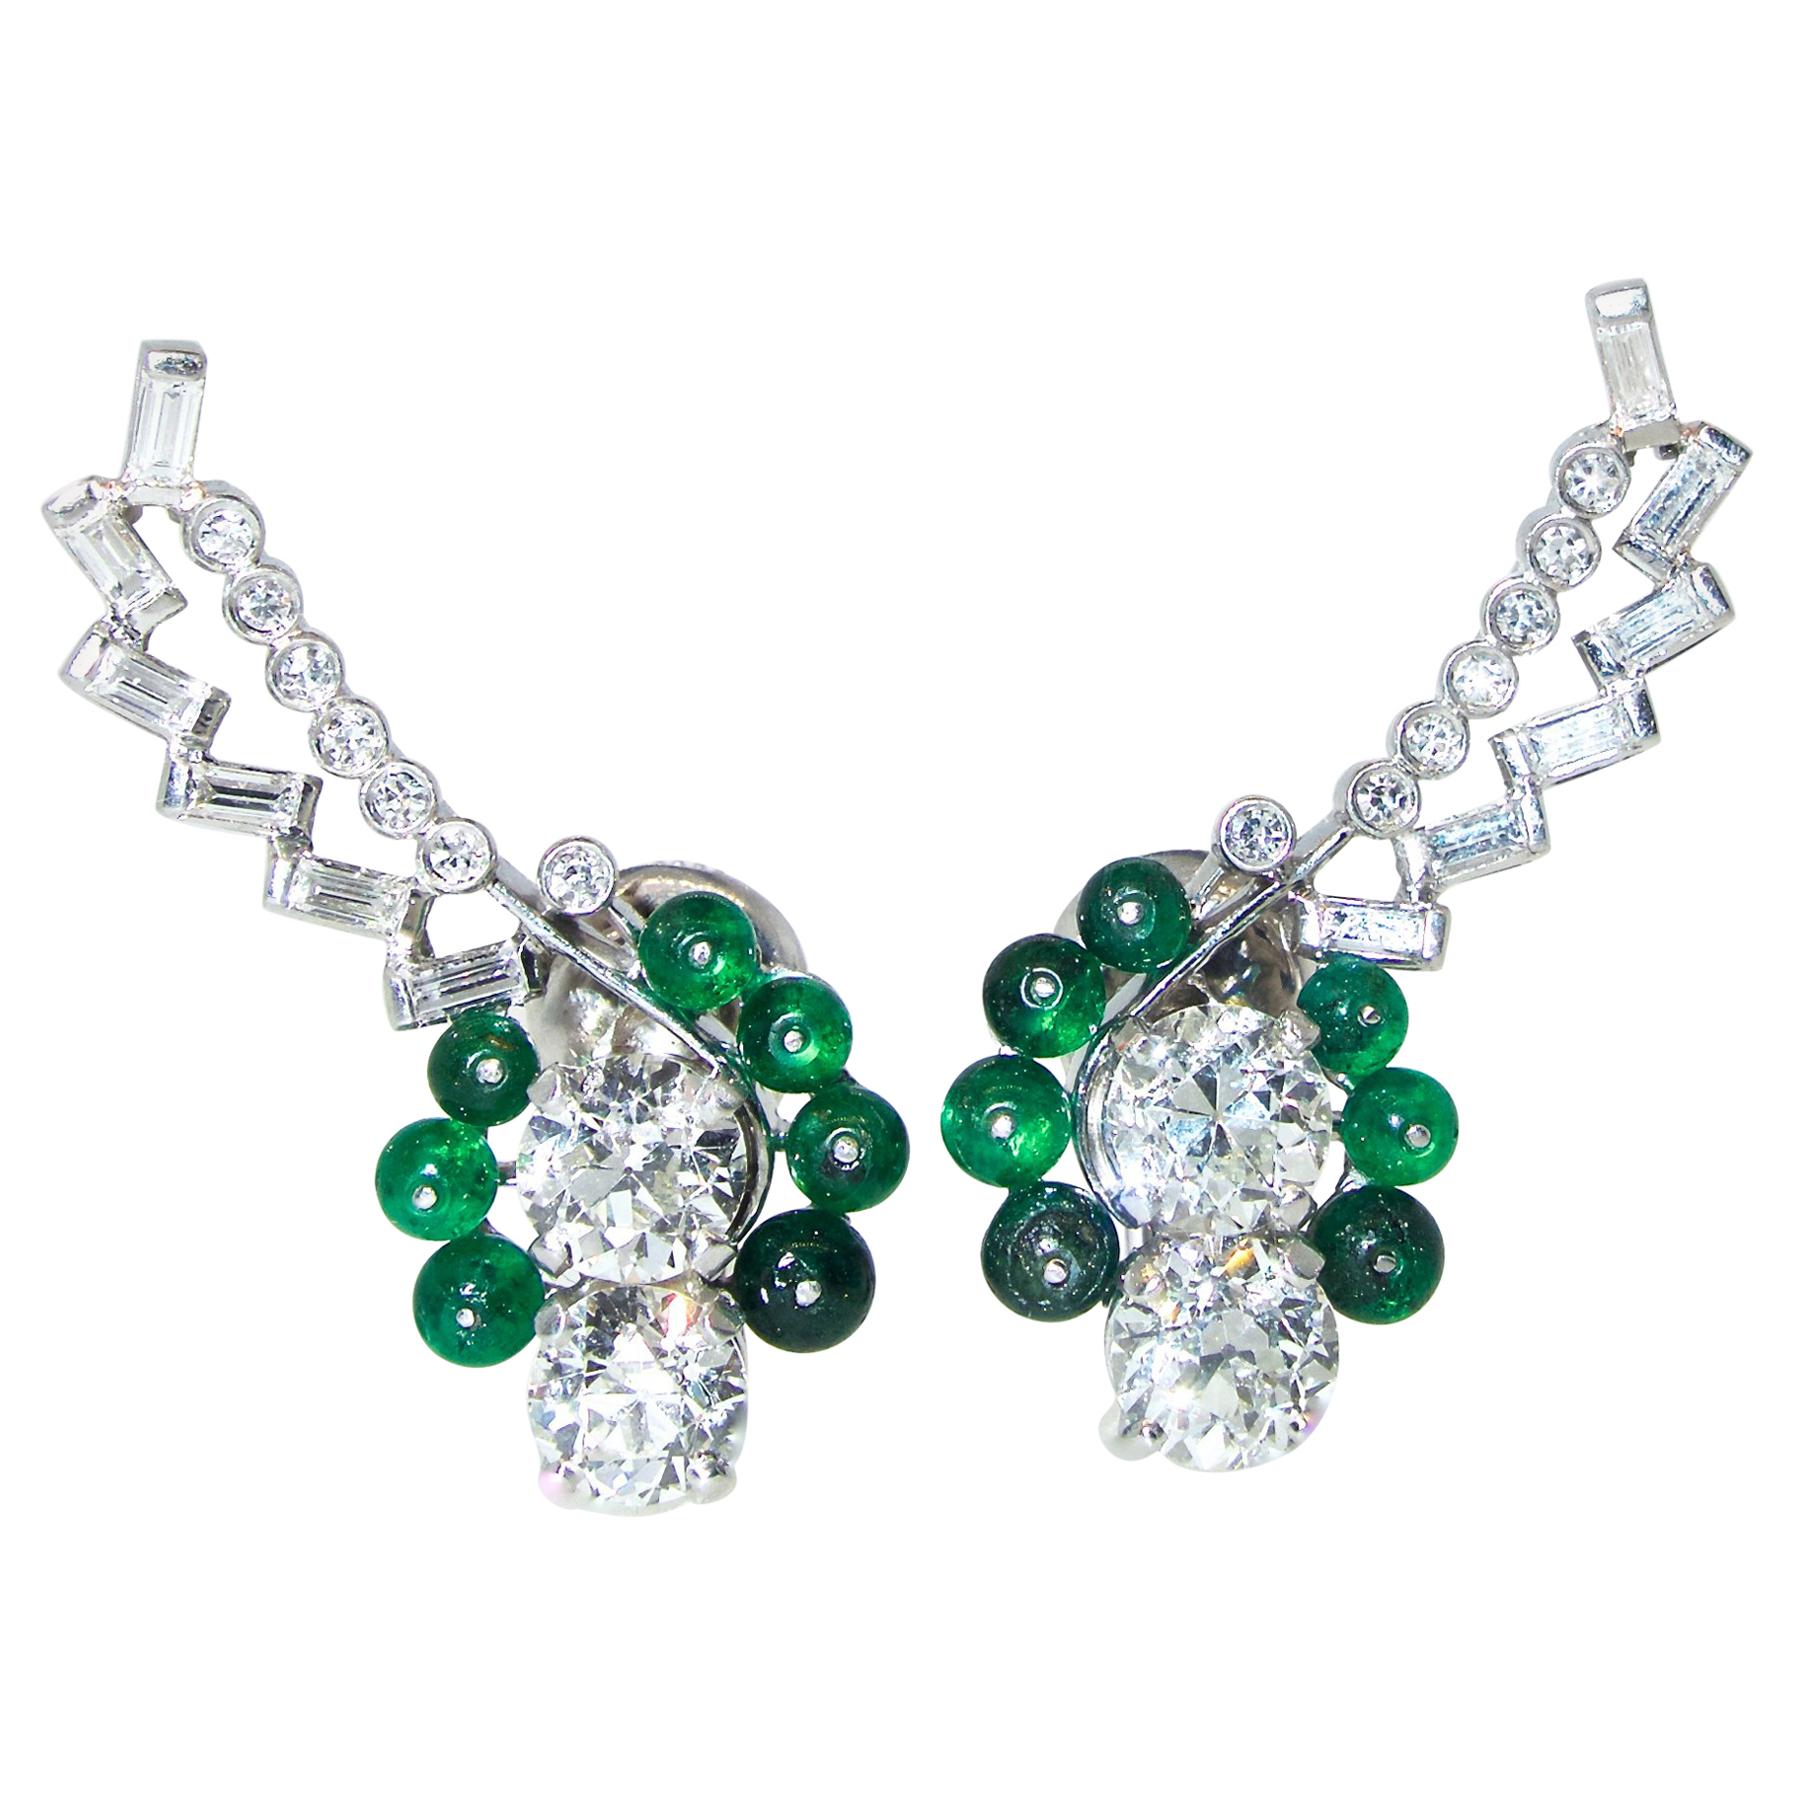 Art Deco Diamond and Emerald Earrings, circa 1935